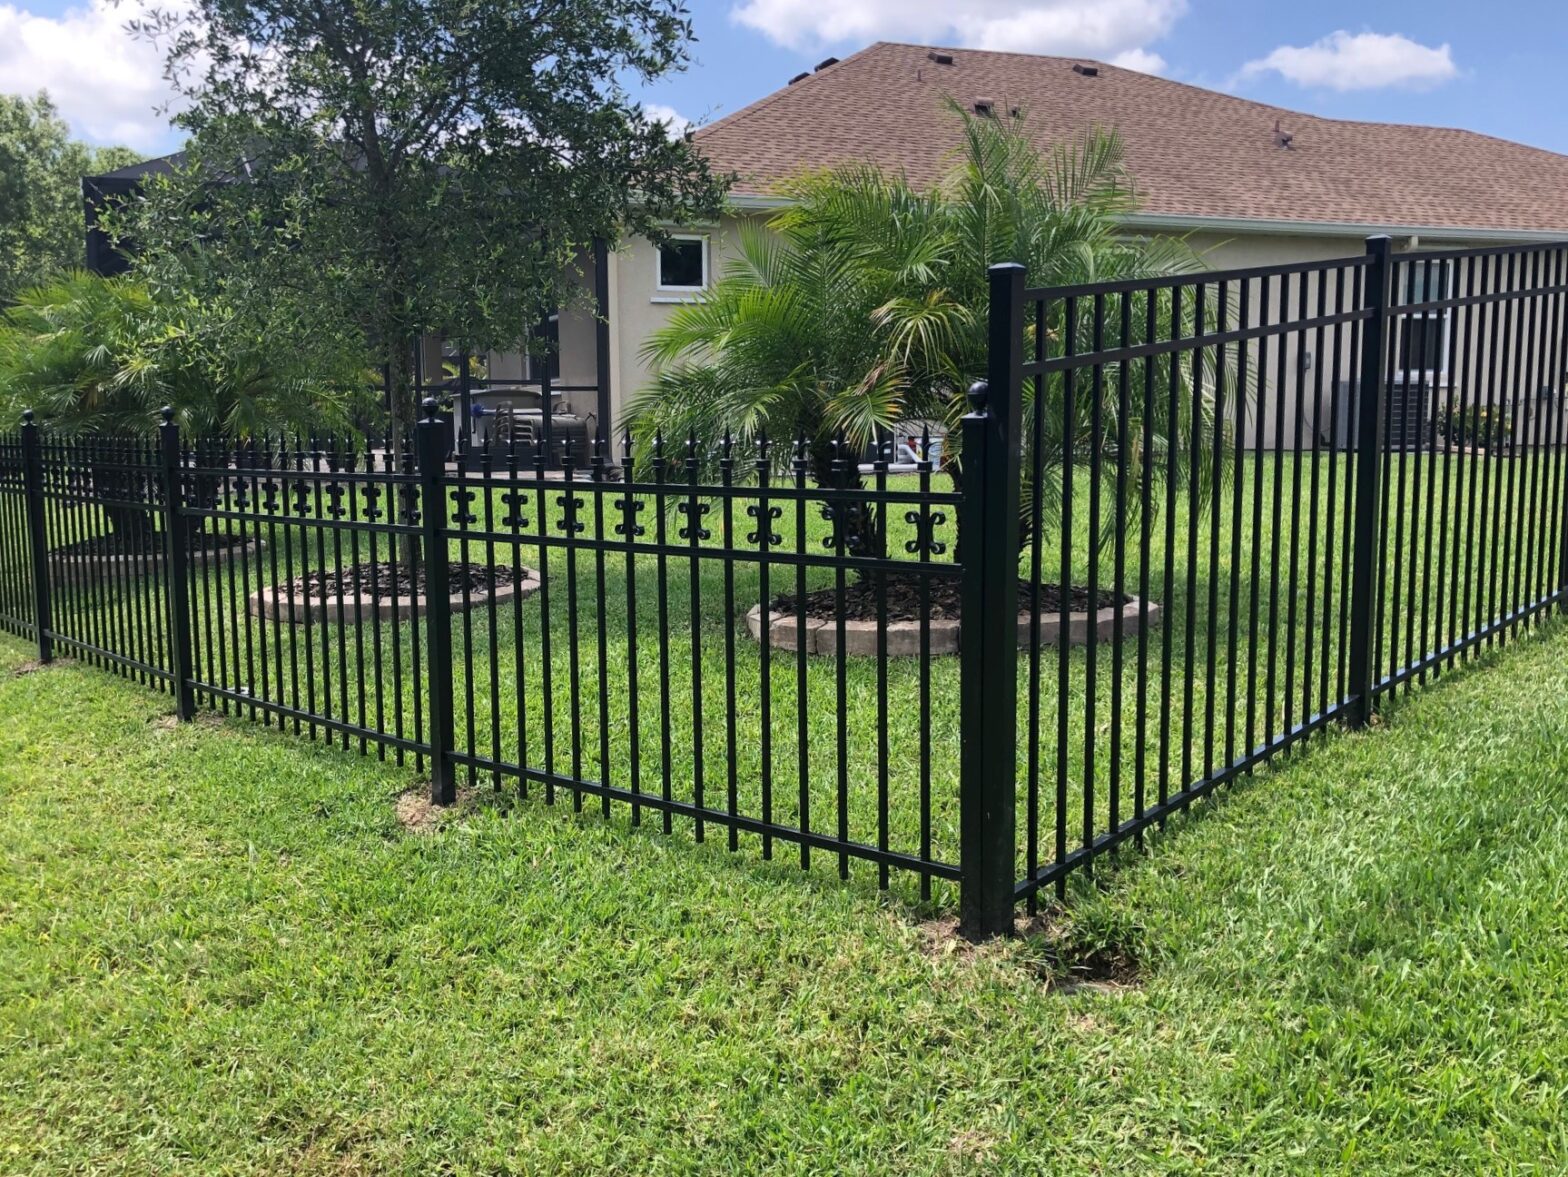 Photo of an Aluminum Fence in Sarasota, Florida to keep dogs safe.